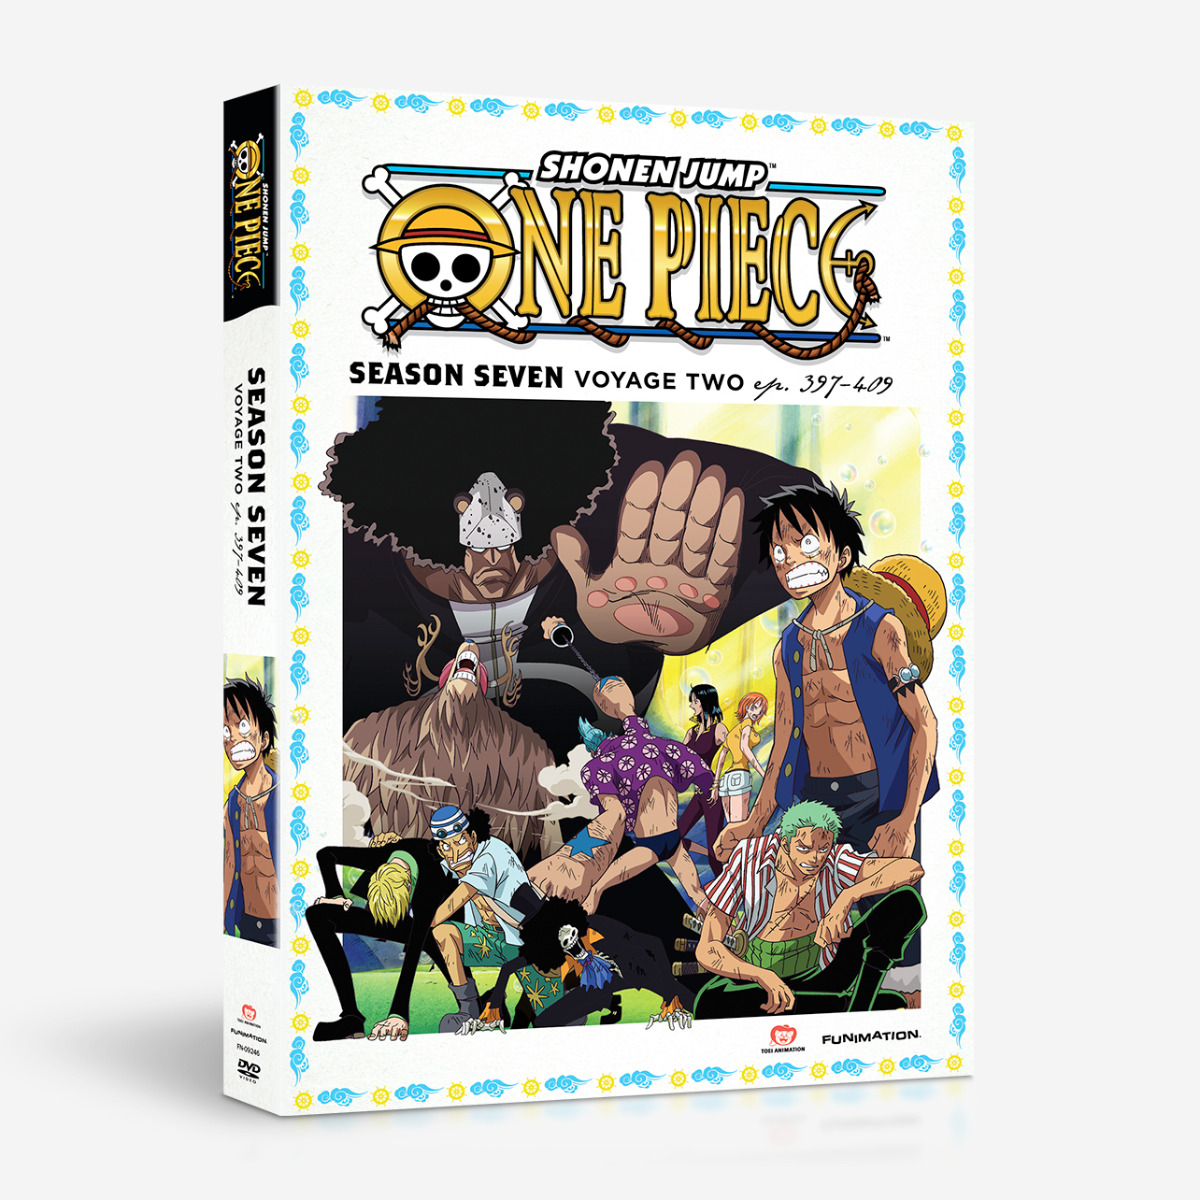 One Piece - Season 7 - Voyage 2 - DVD image count 2